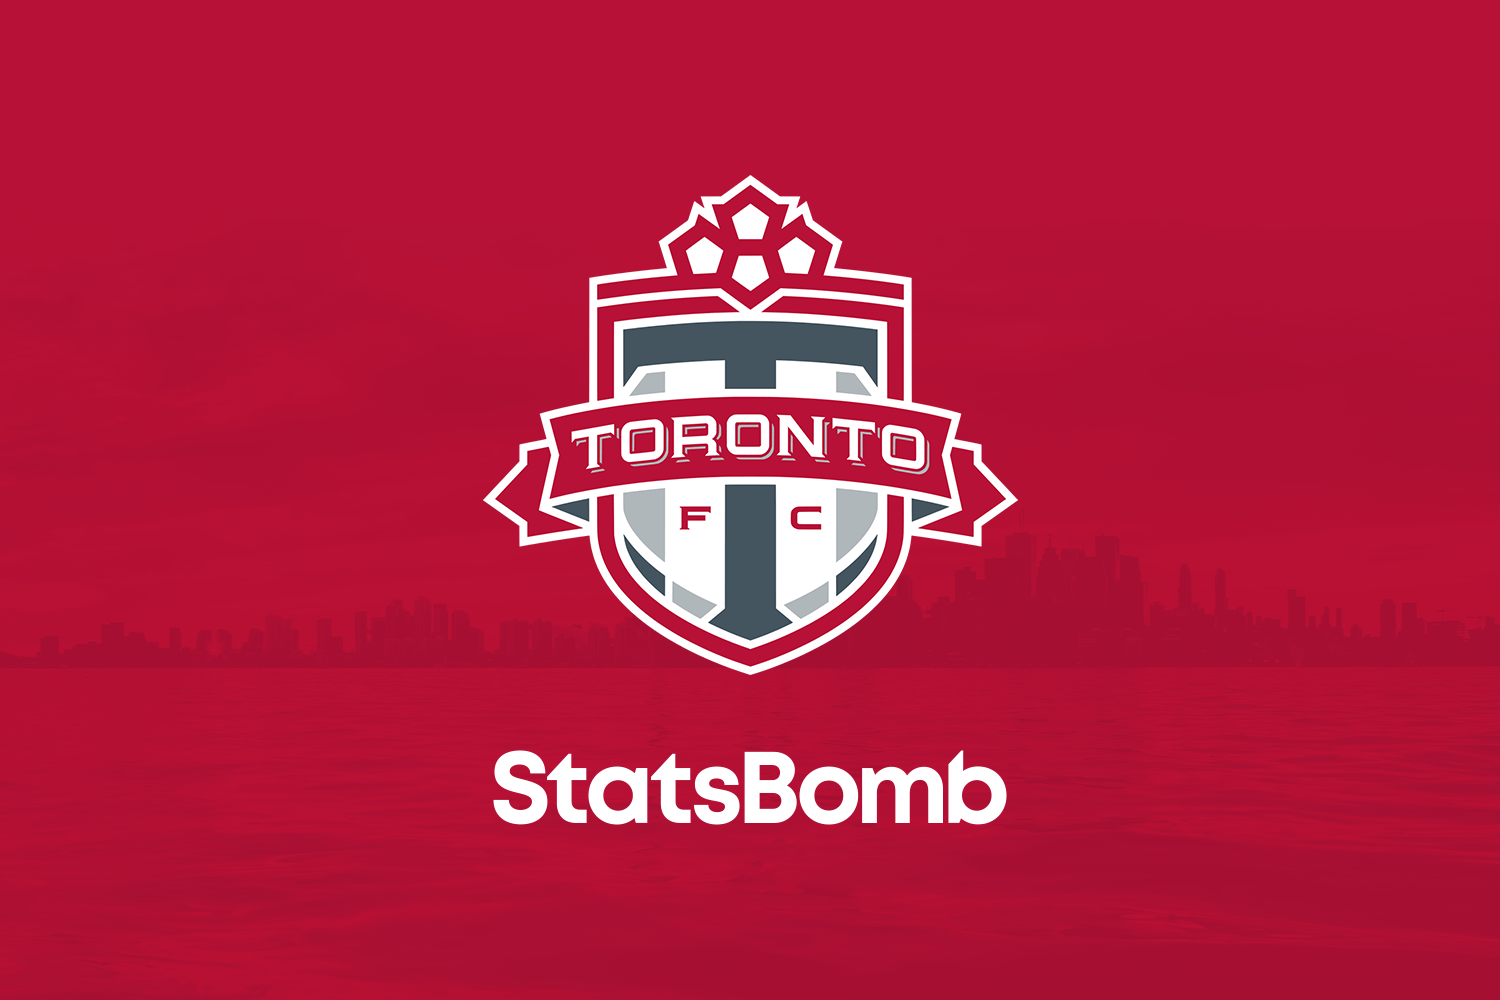 StatsBomb Grows Presence In Major League Soccer With Toronto FC Partnership